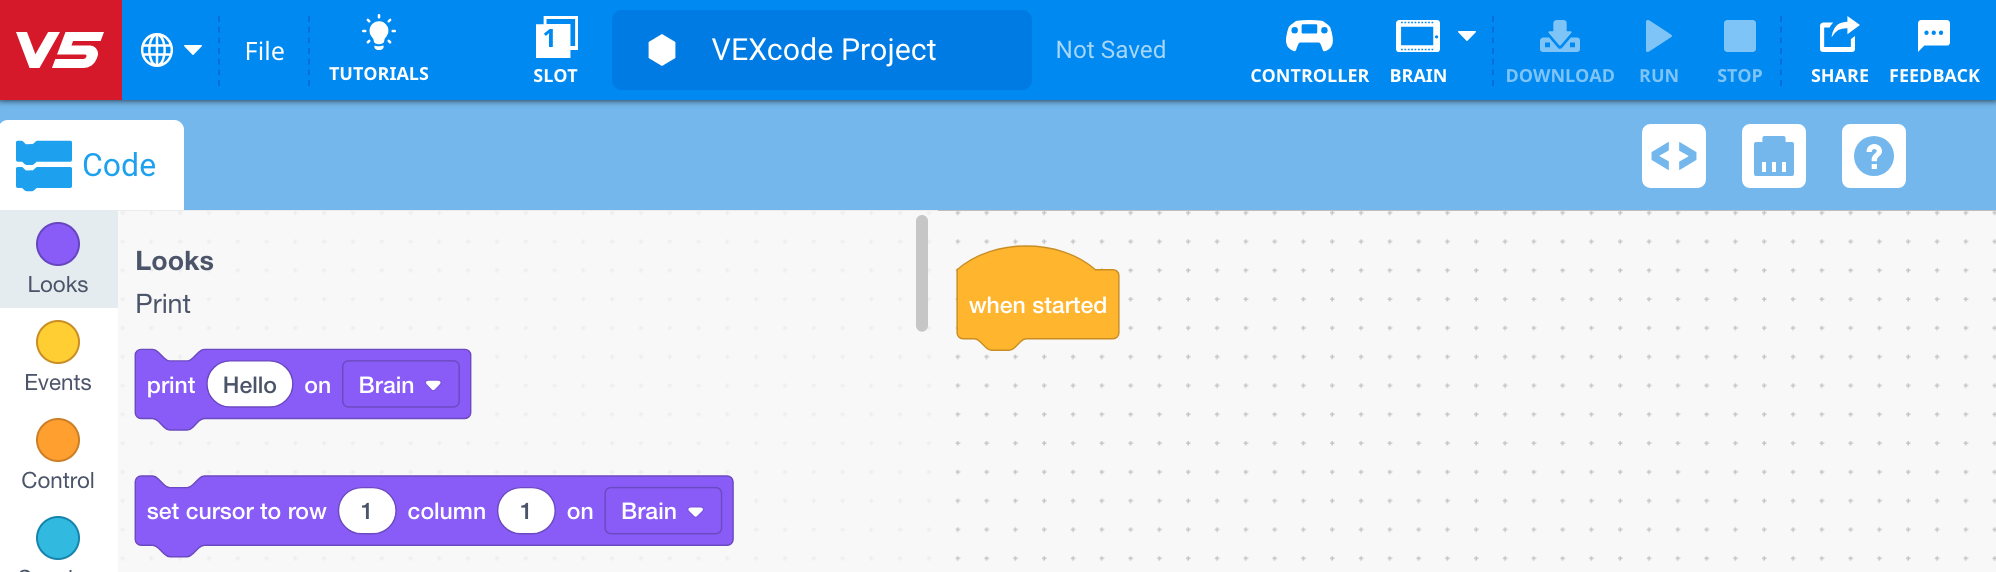 Inicie VEXcode V5